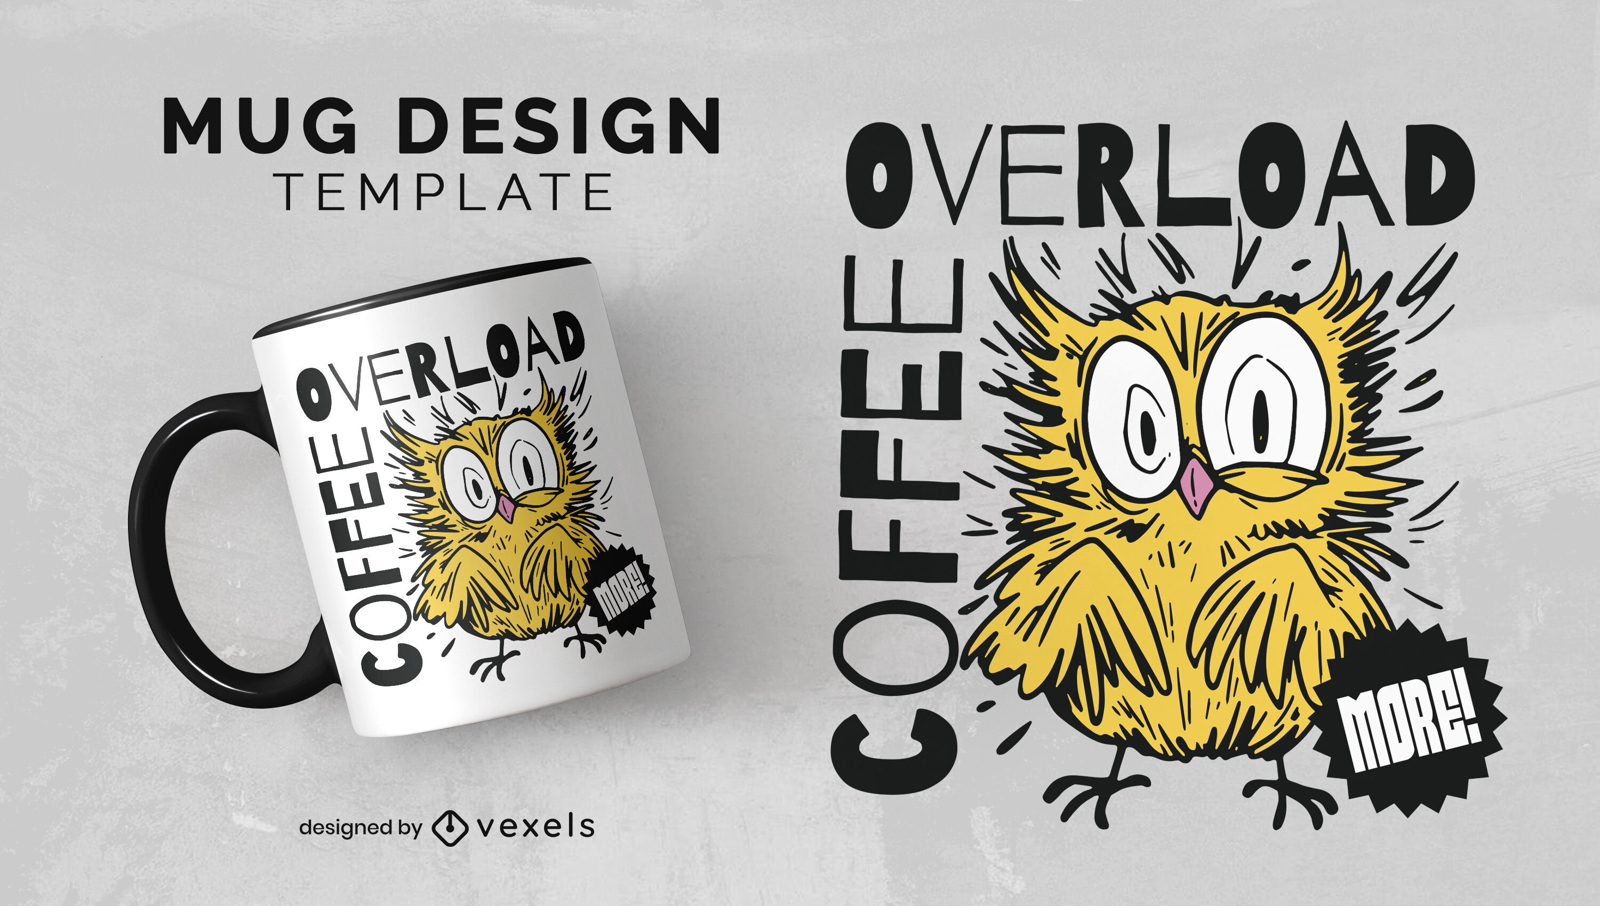 Taza de cafe Vectors & Illustrations for Free Download